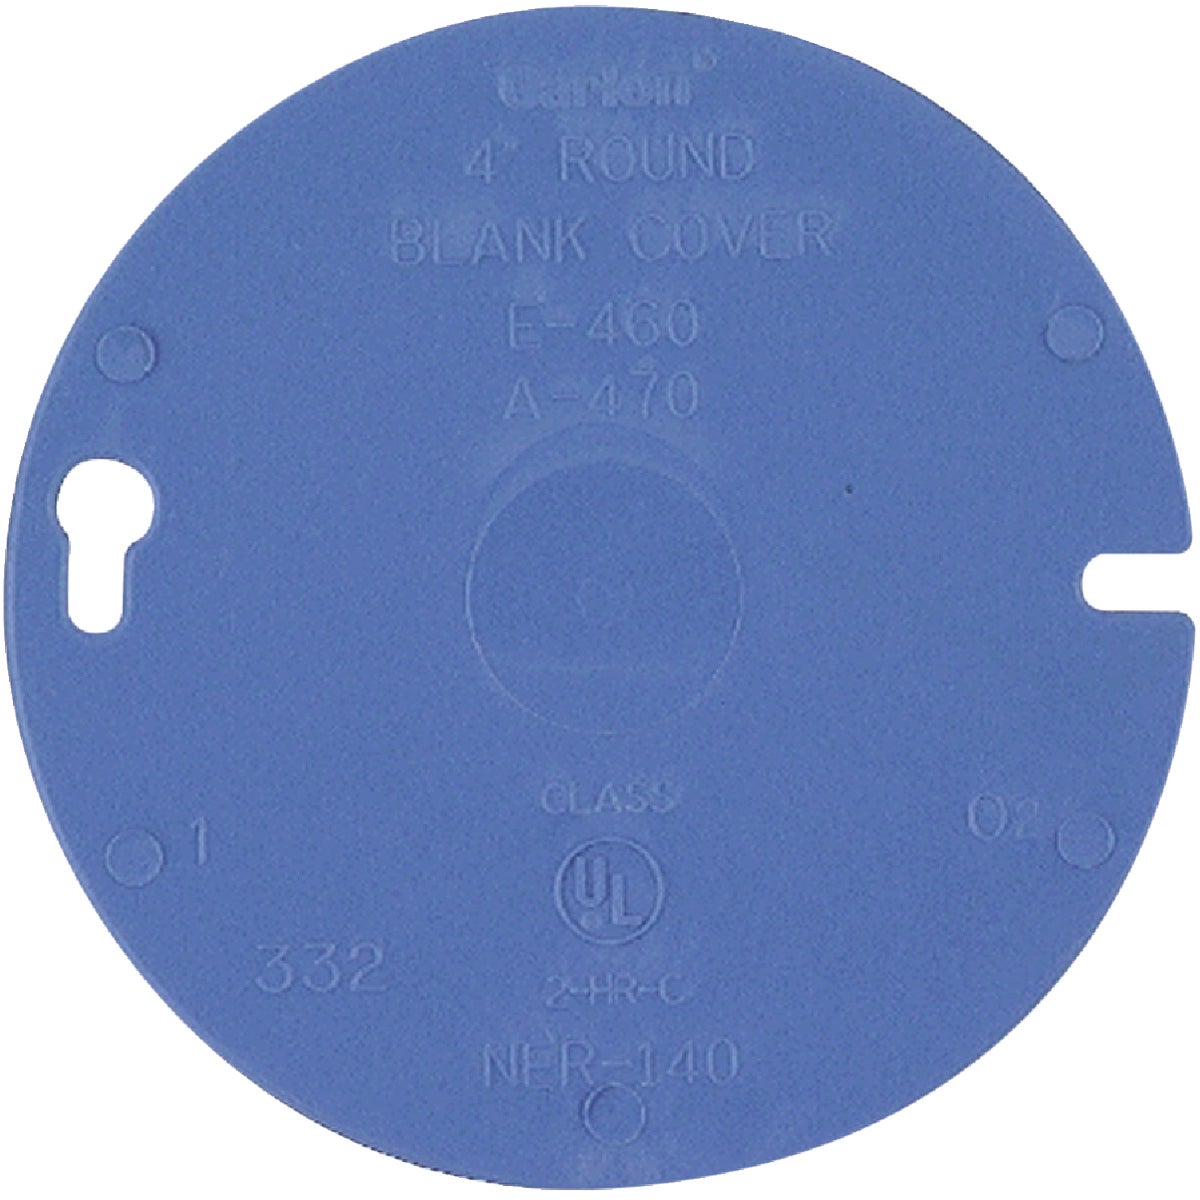 Item 511013, PVC (polyvinyl chloride), 4-inch, round blank box cover.